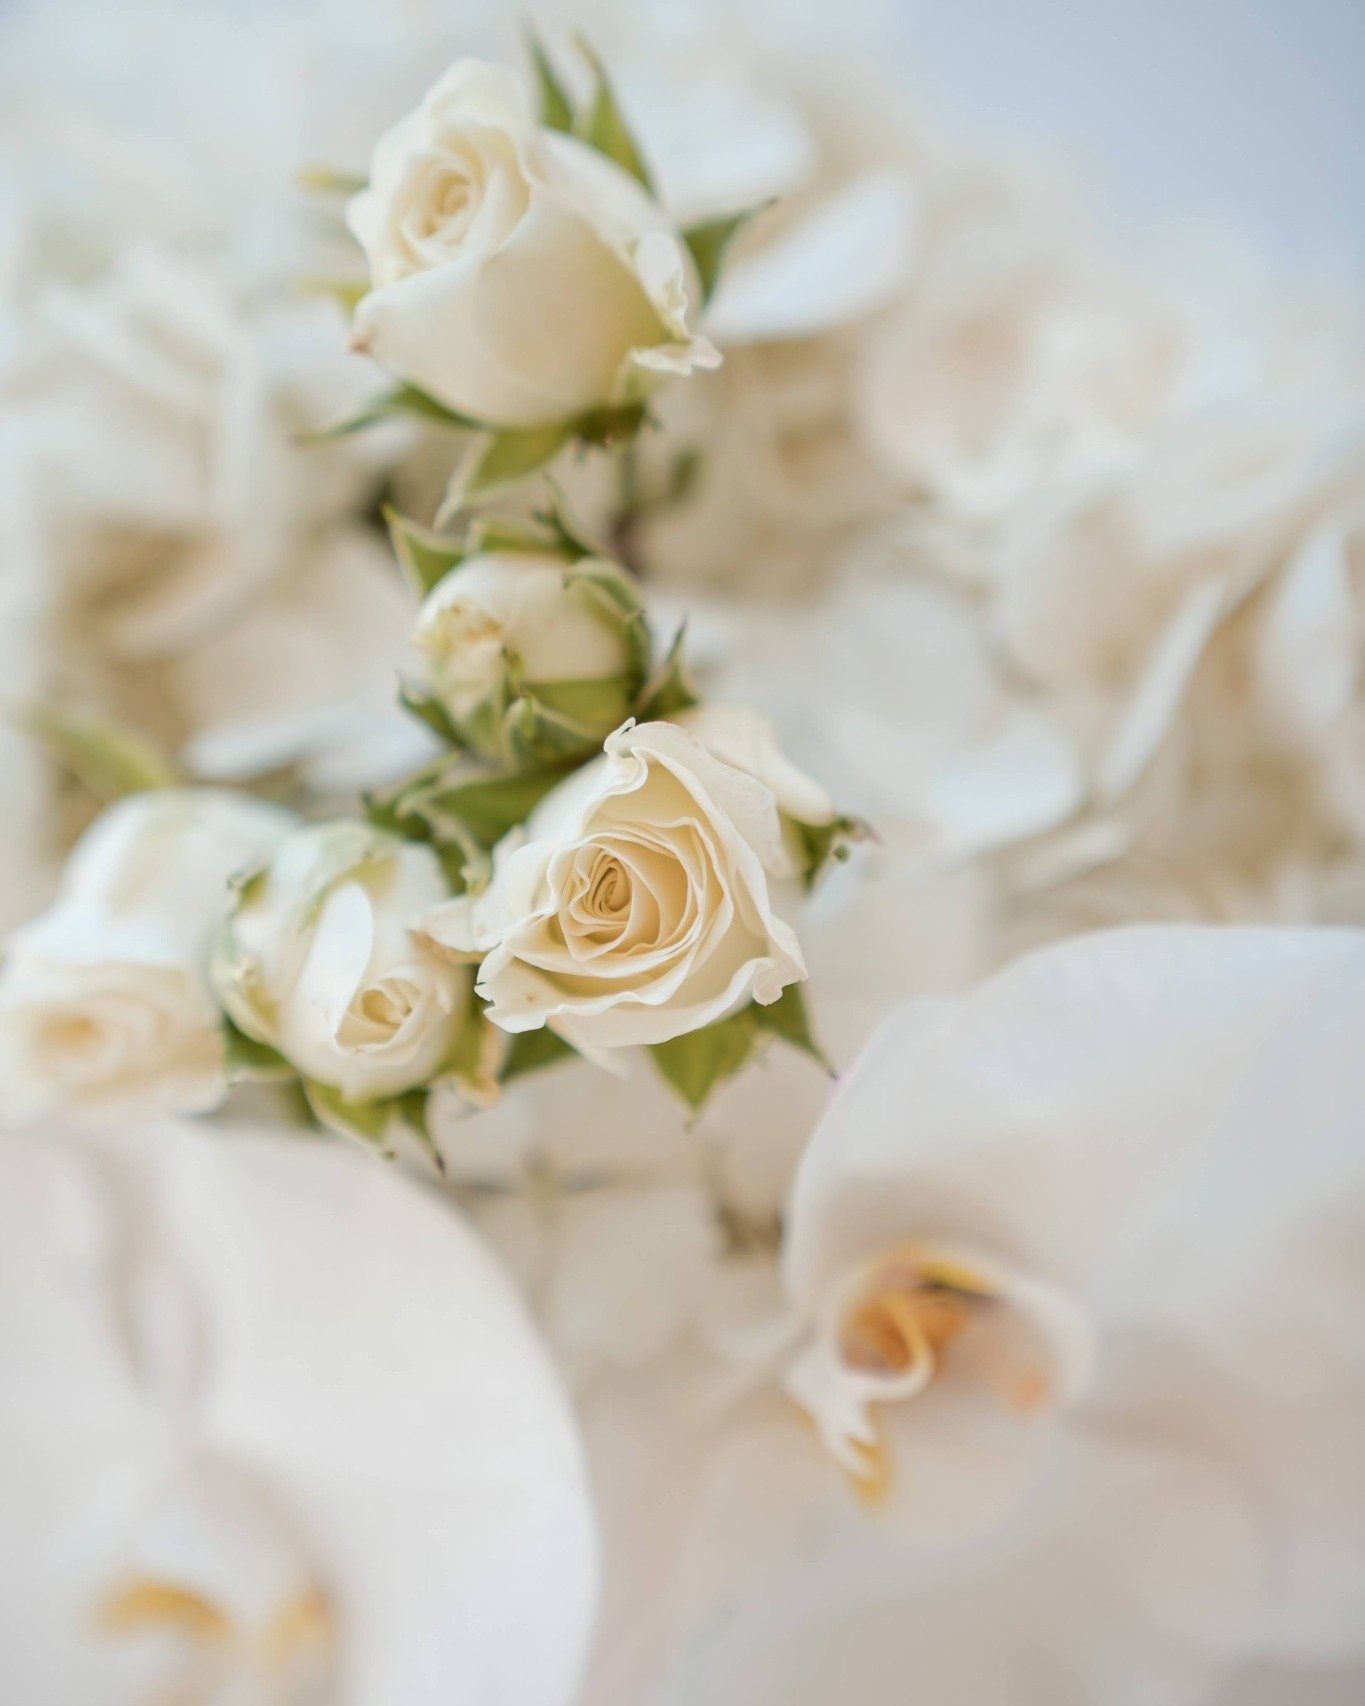 Which floral palette tells your love story?
.
.
.
.
.
.
.
#weddingsbycacique #destinationwedding #storytelling #bahamaswedding #bahamasislands #beachwedding #weddinglogistics #weddingflorals #bespokewedding #wedding #florals #weddinginspiration #brid